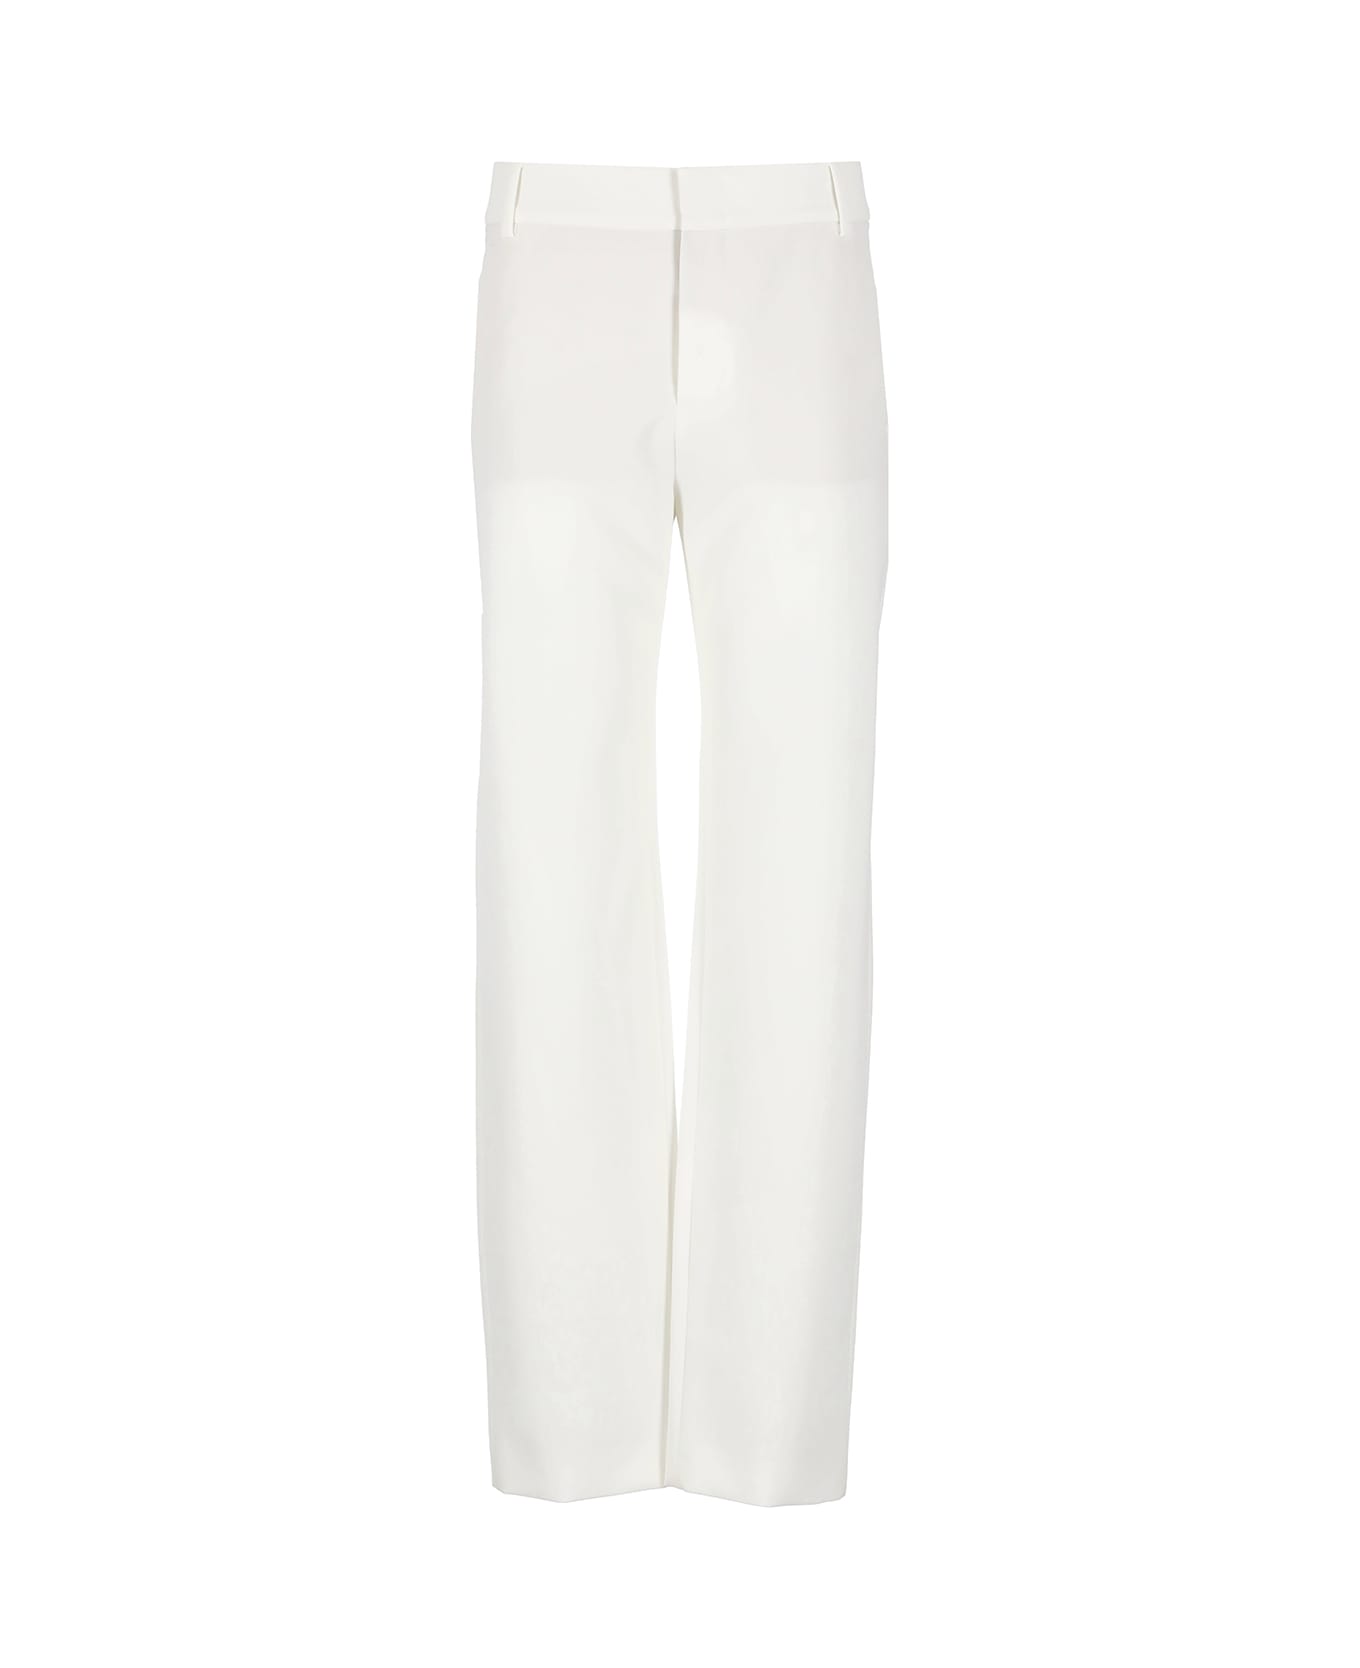 M05CH1N0 Jeans Satin Trousers - White